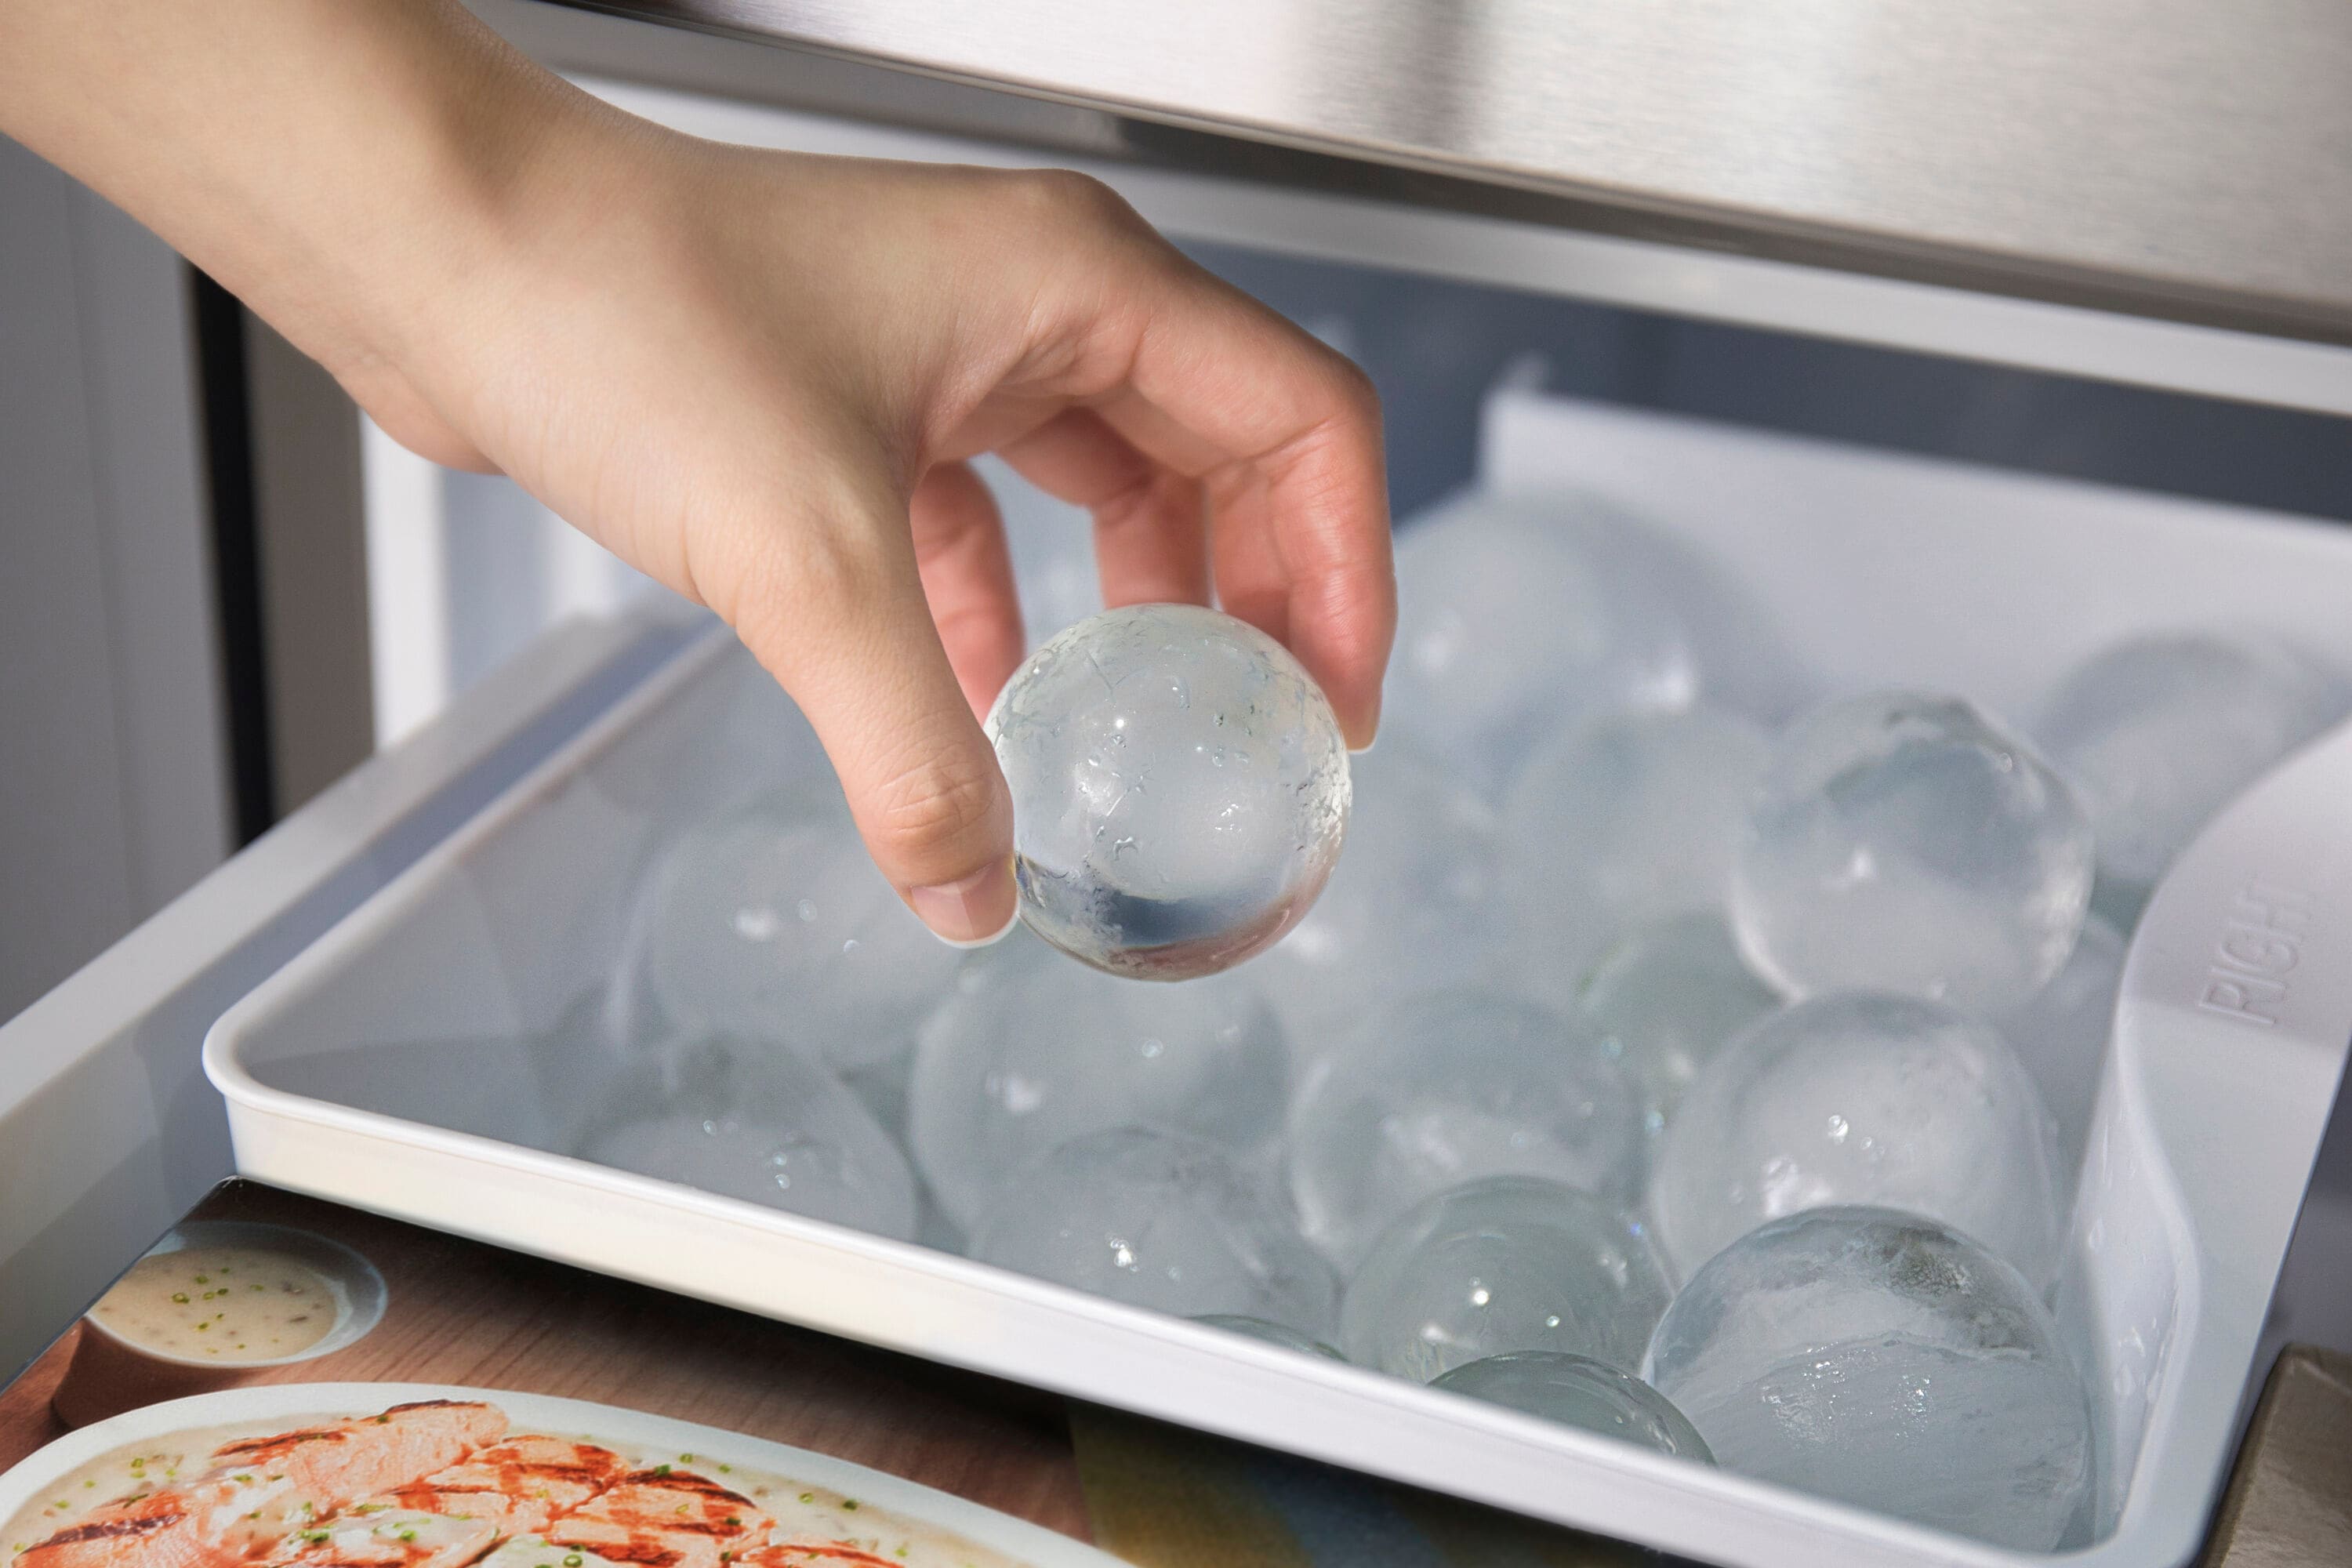 LG Refrigerator - Understanding Your LG Craft Ice Maker